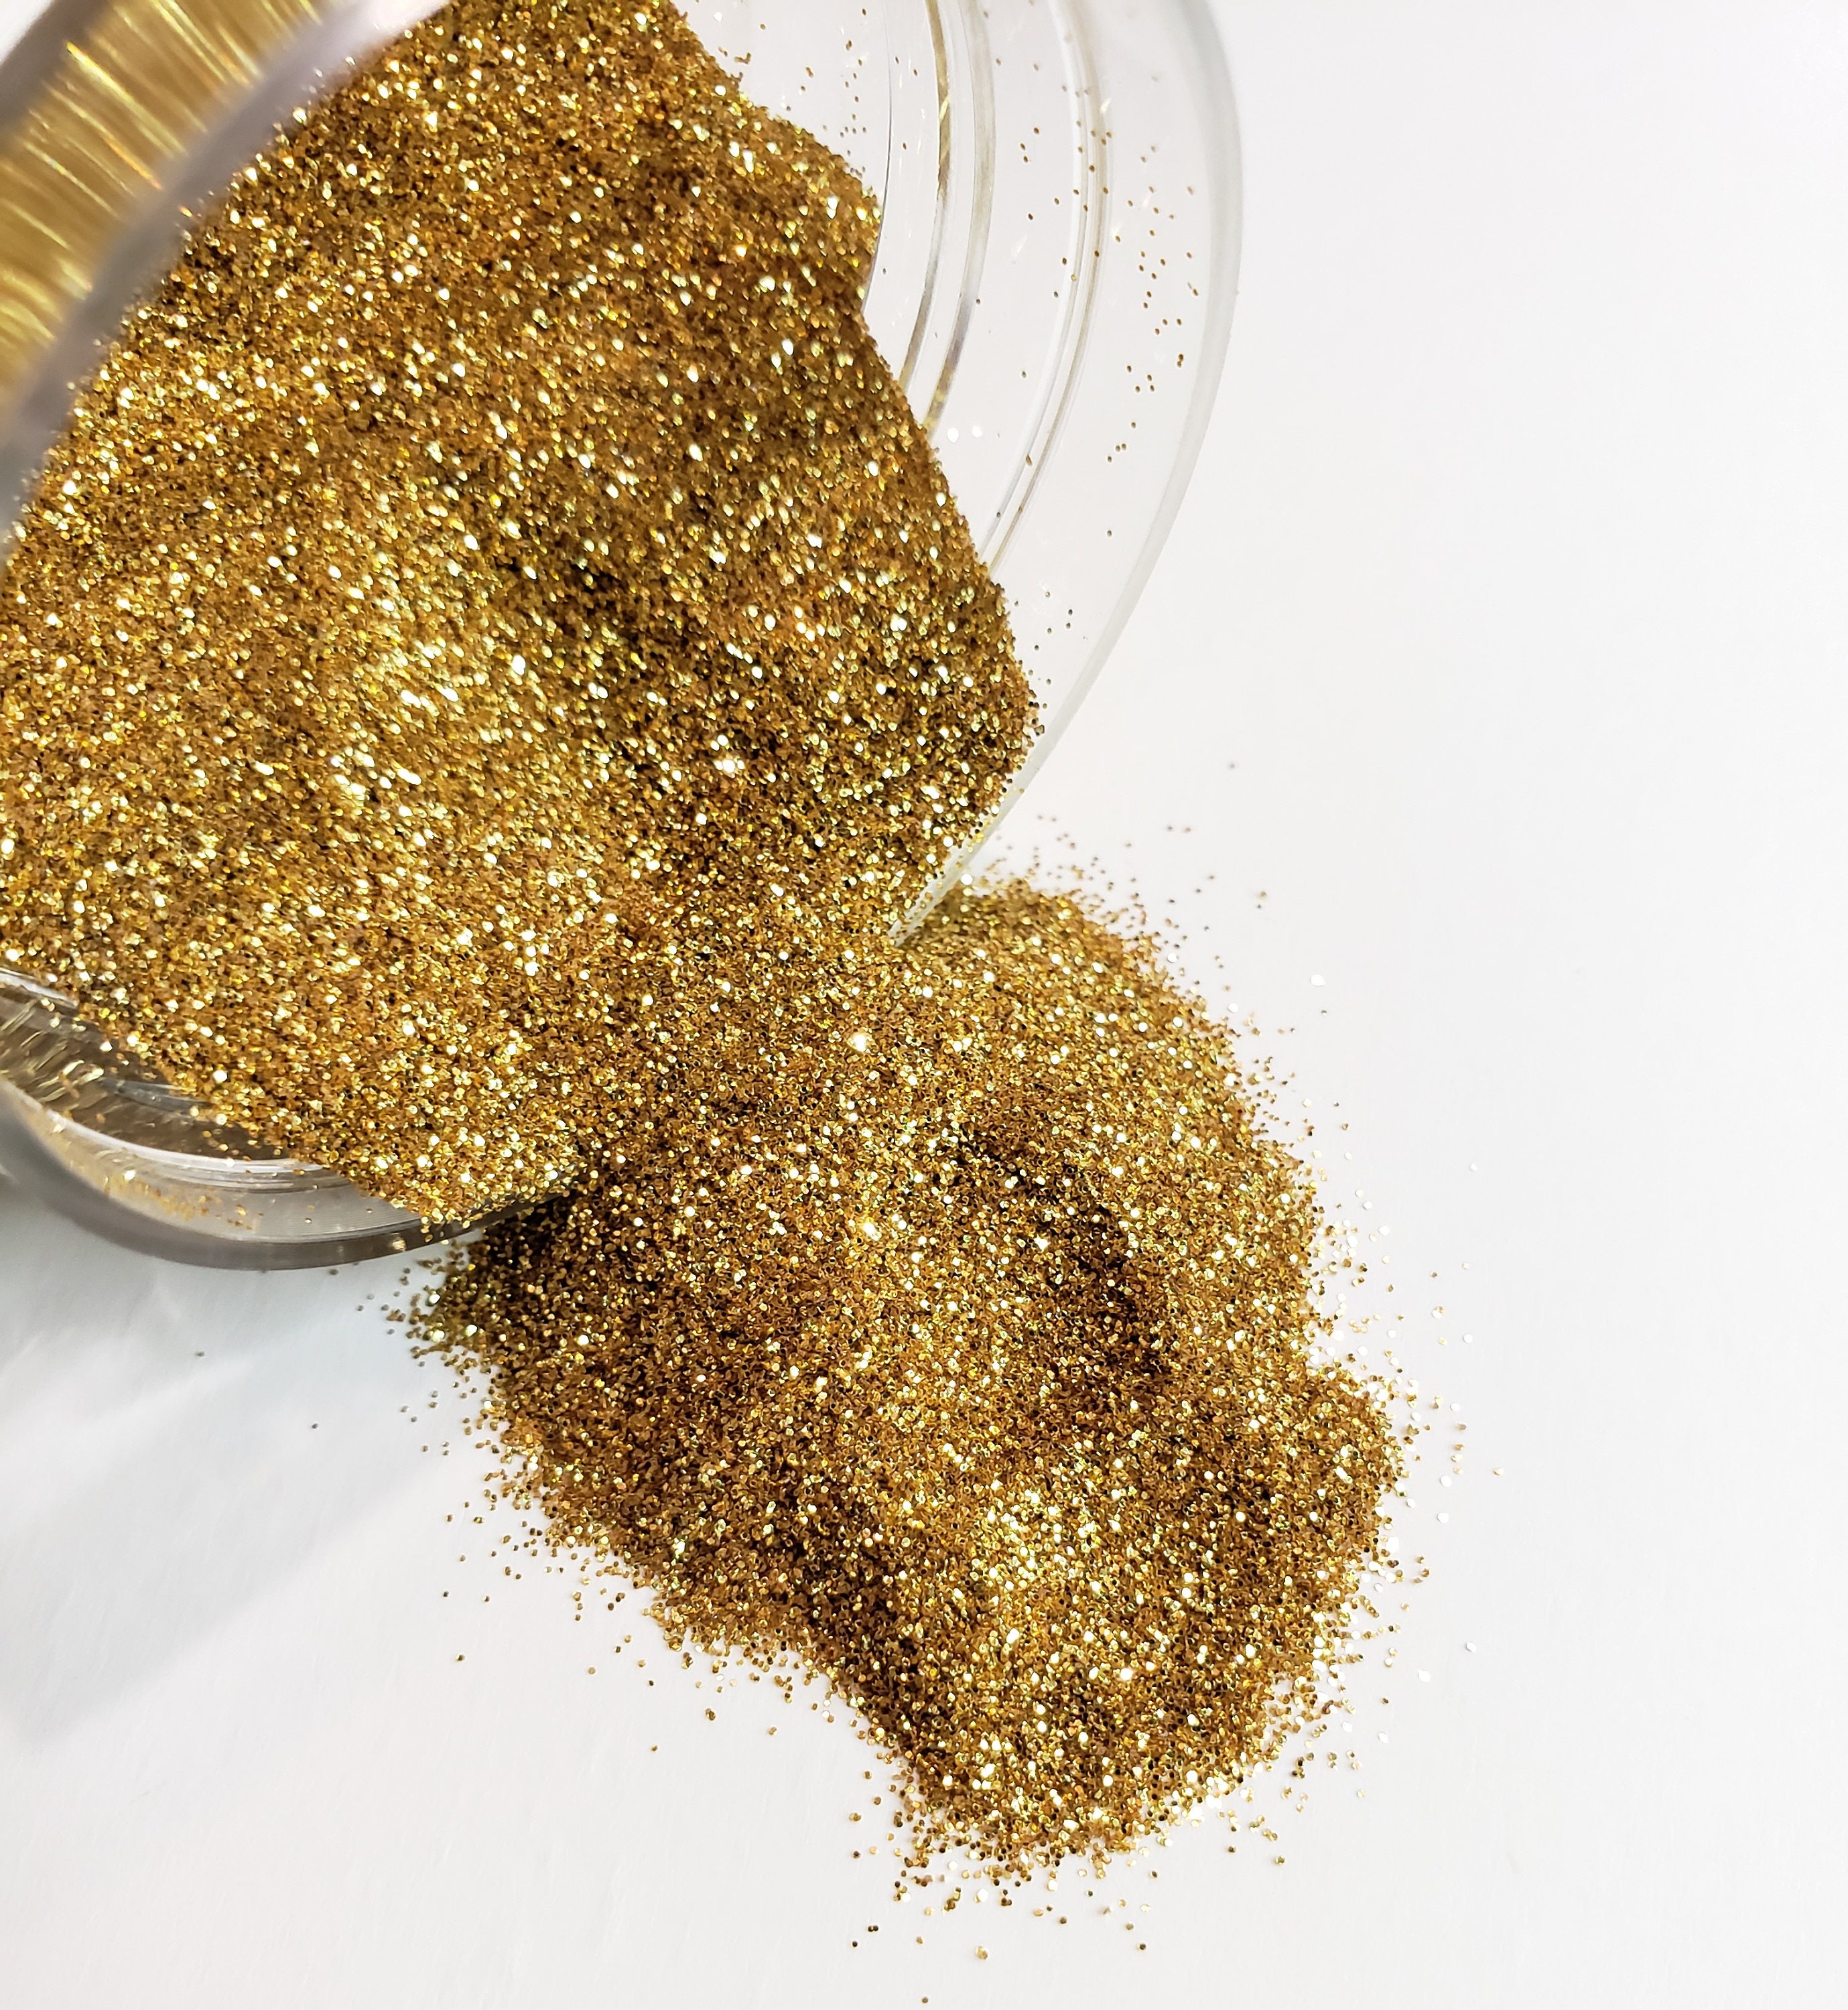 GOLD - Glitter Powder